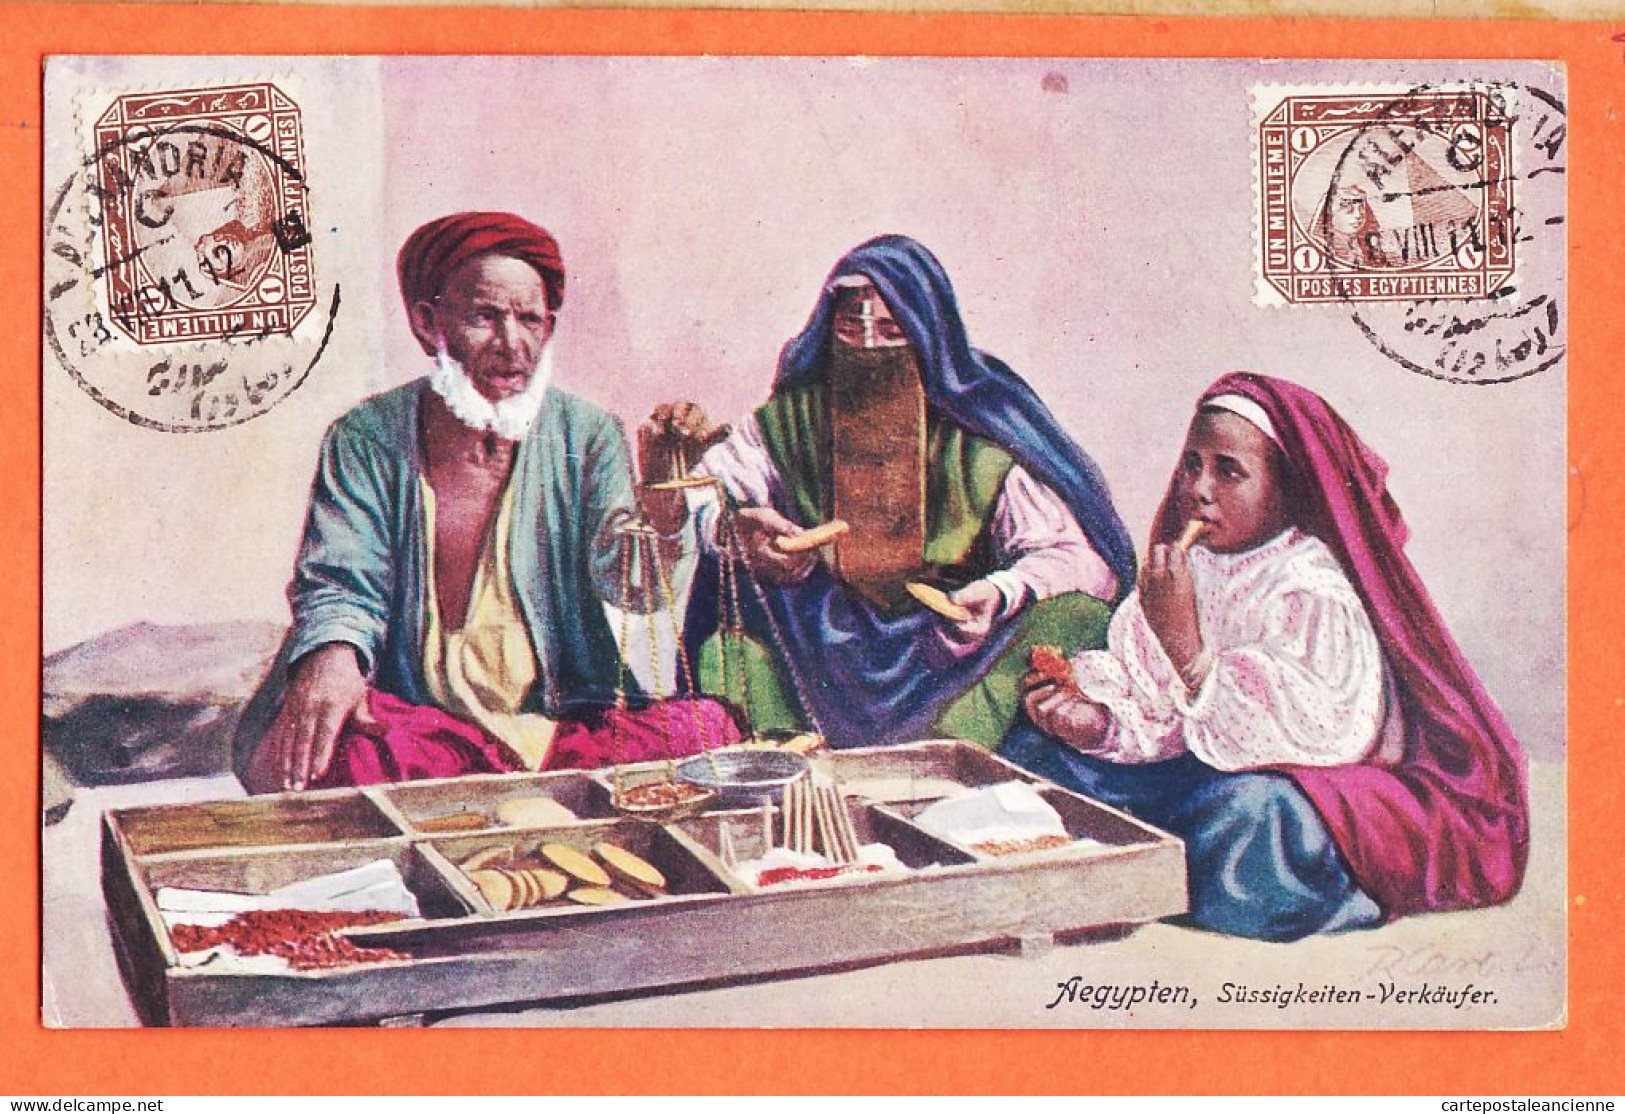 38955 / ⭐ AEGYPTEN Süssigkeiten Verkaufer ◉ EGYPTE Vendeur Friandises 1911 à Jeanne LEVECQUE Nanterre ◉ WANDERER 1336 - Personas